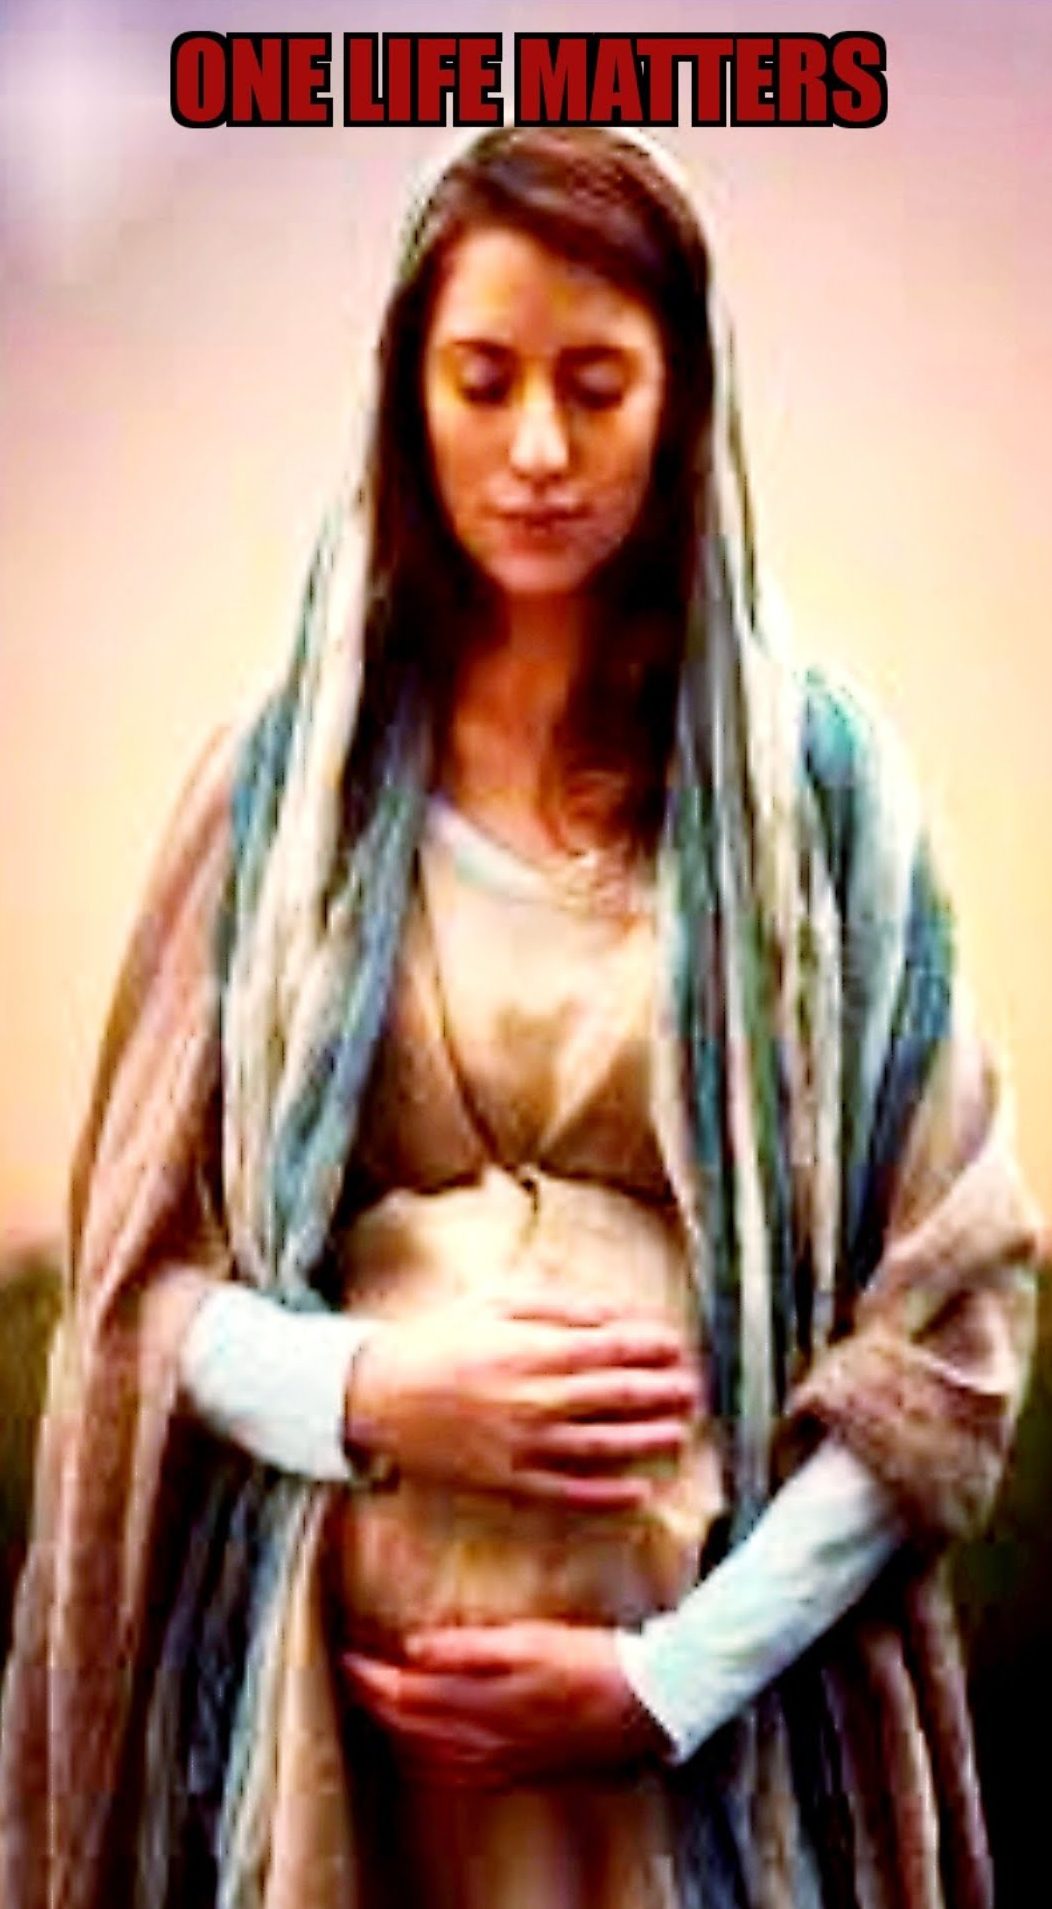 Mary cradles Jesus in her womb.